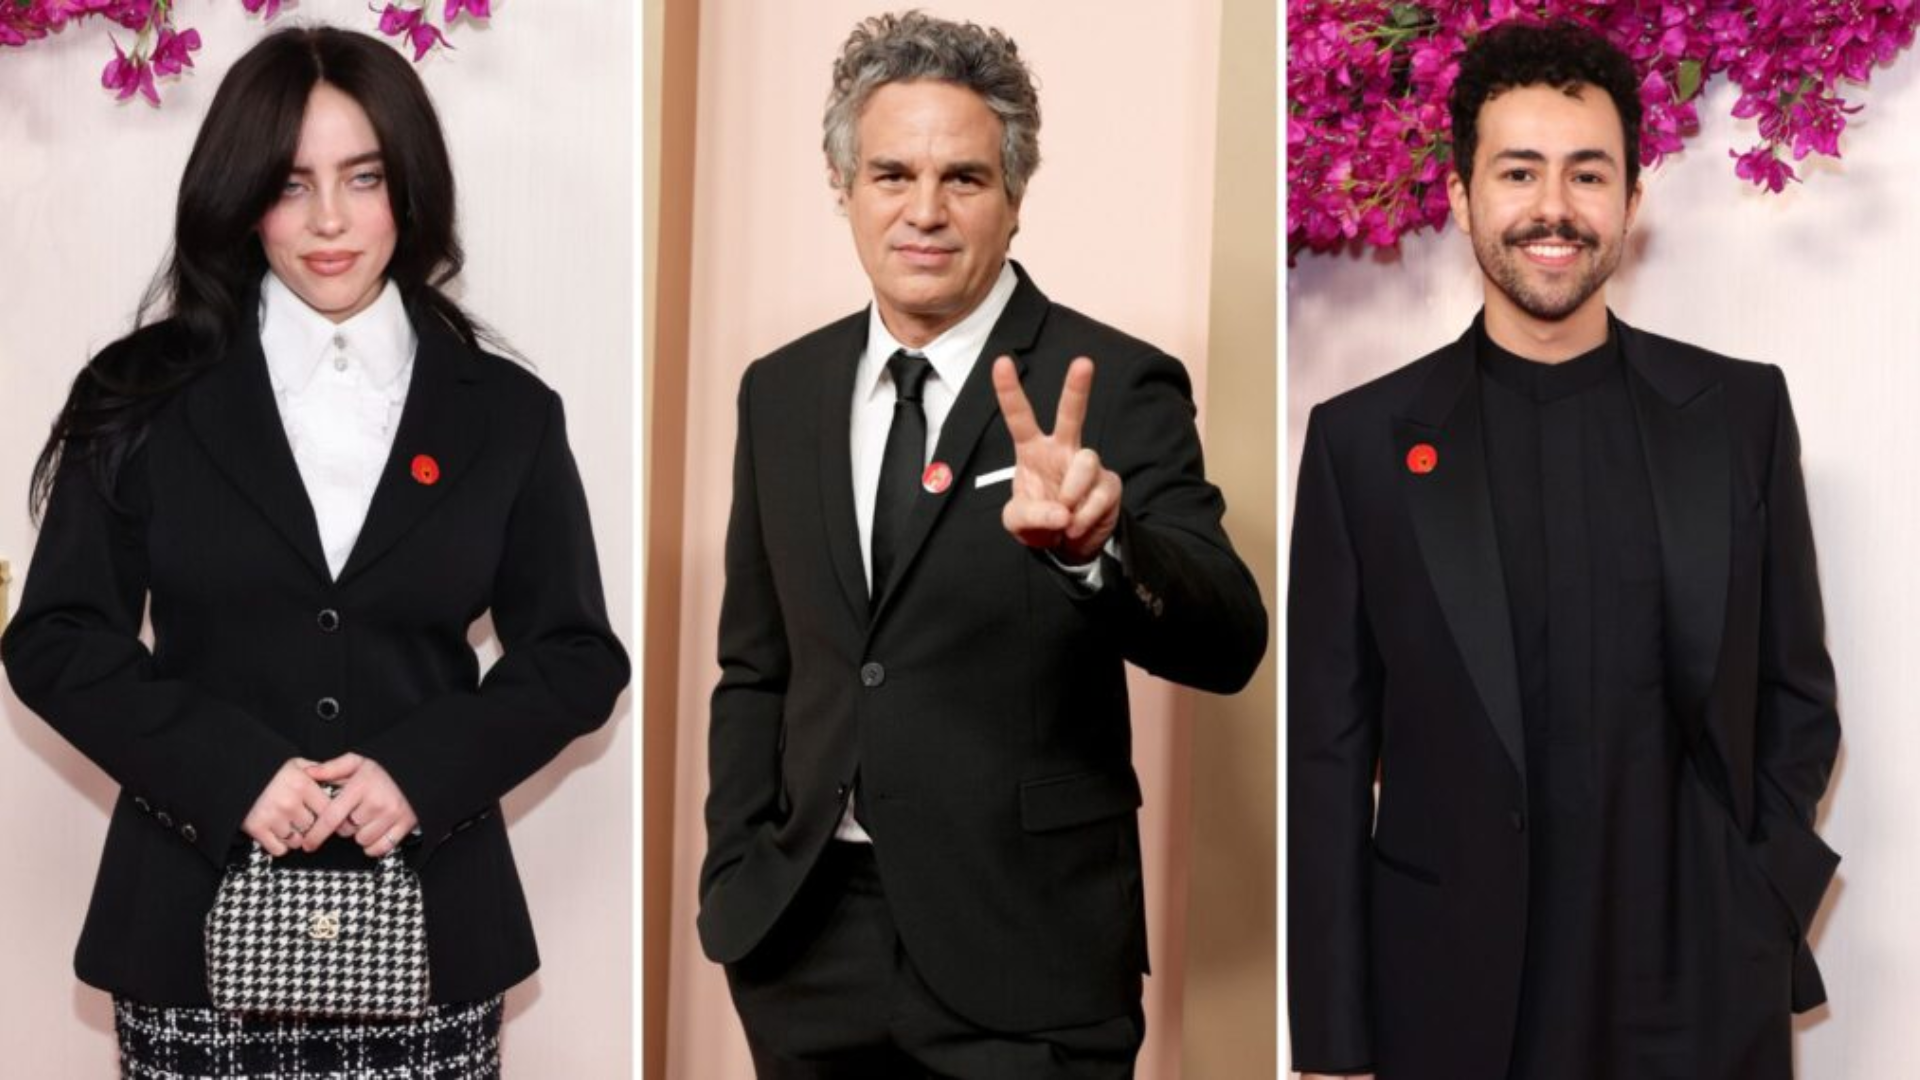 Celebrities Wear Red Pinns Calling for Ceasefire in Gaza